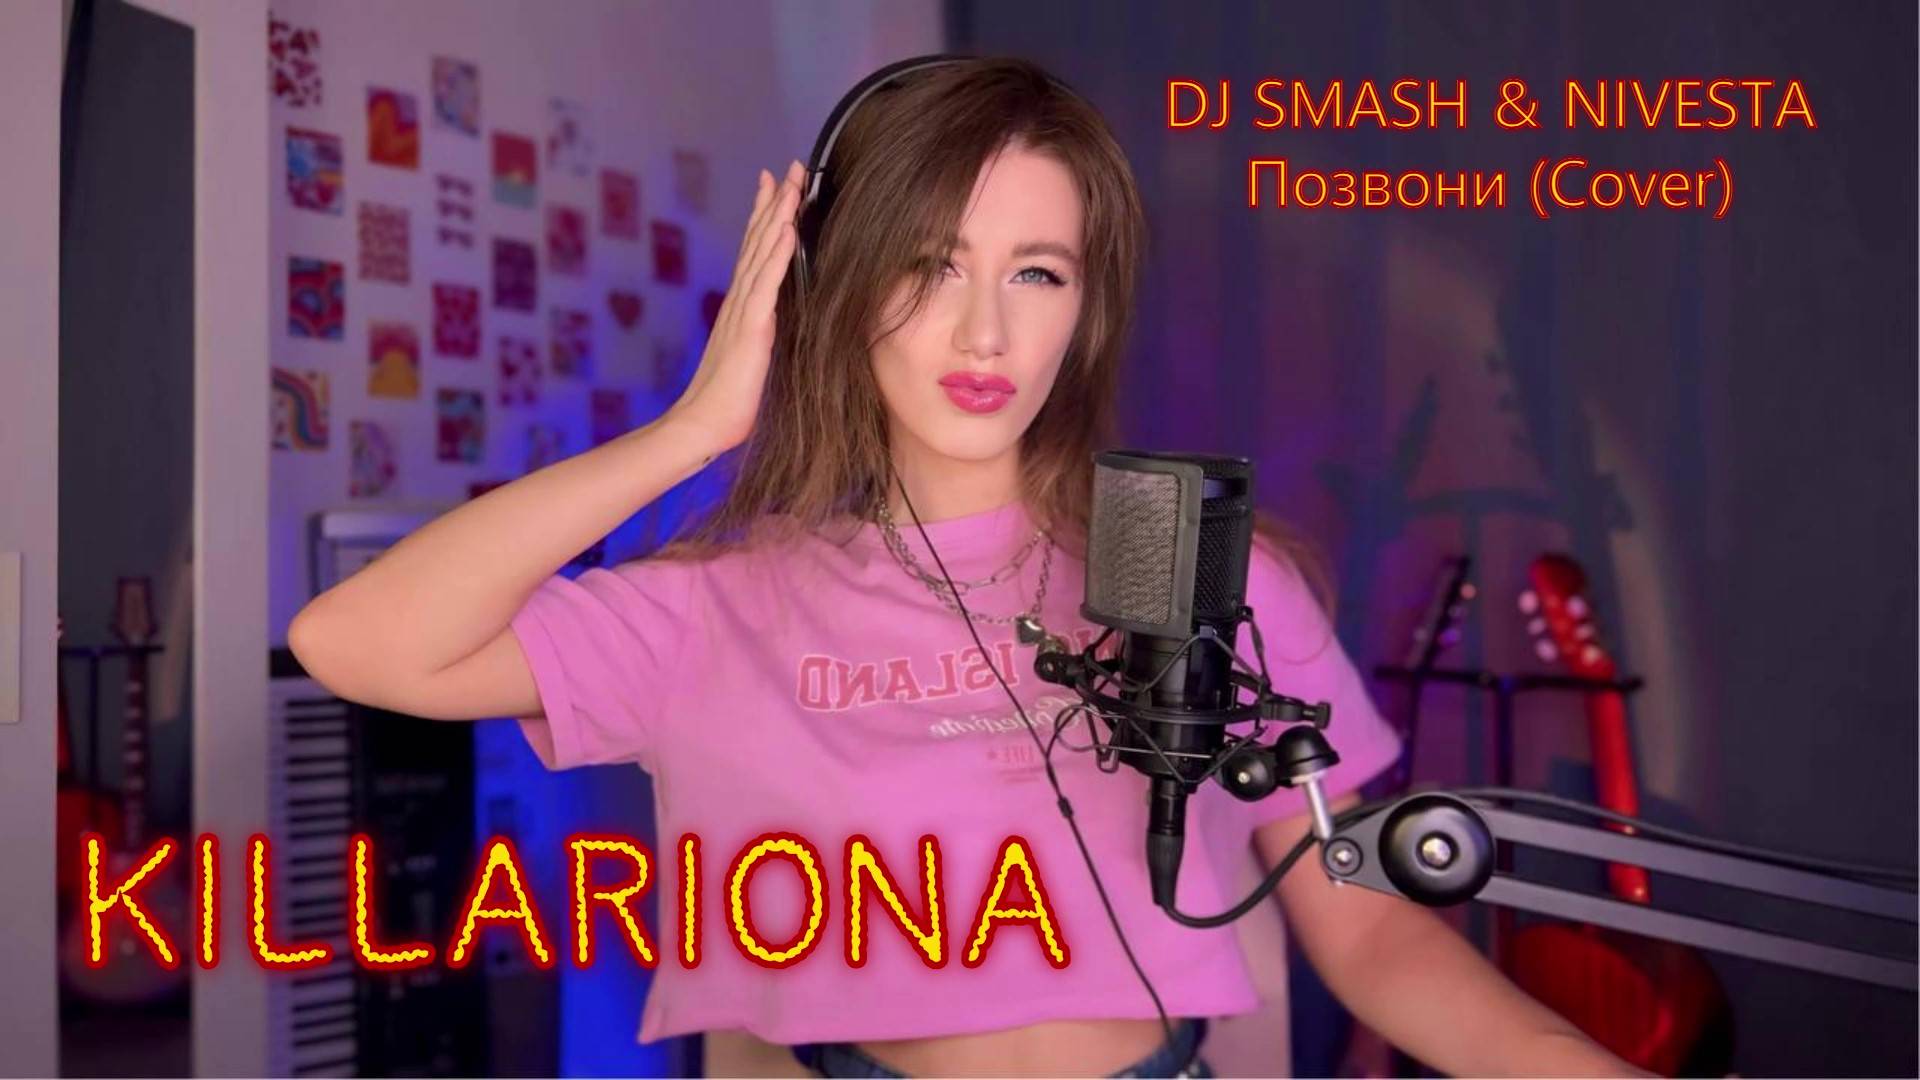 KILLARIONA — «Позвони» DJ SMASH & NIVESTA (Cover) #killariona #живойзвук #coversong #русскиепесни